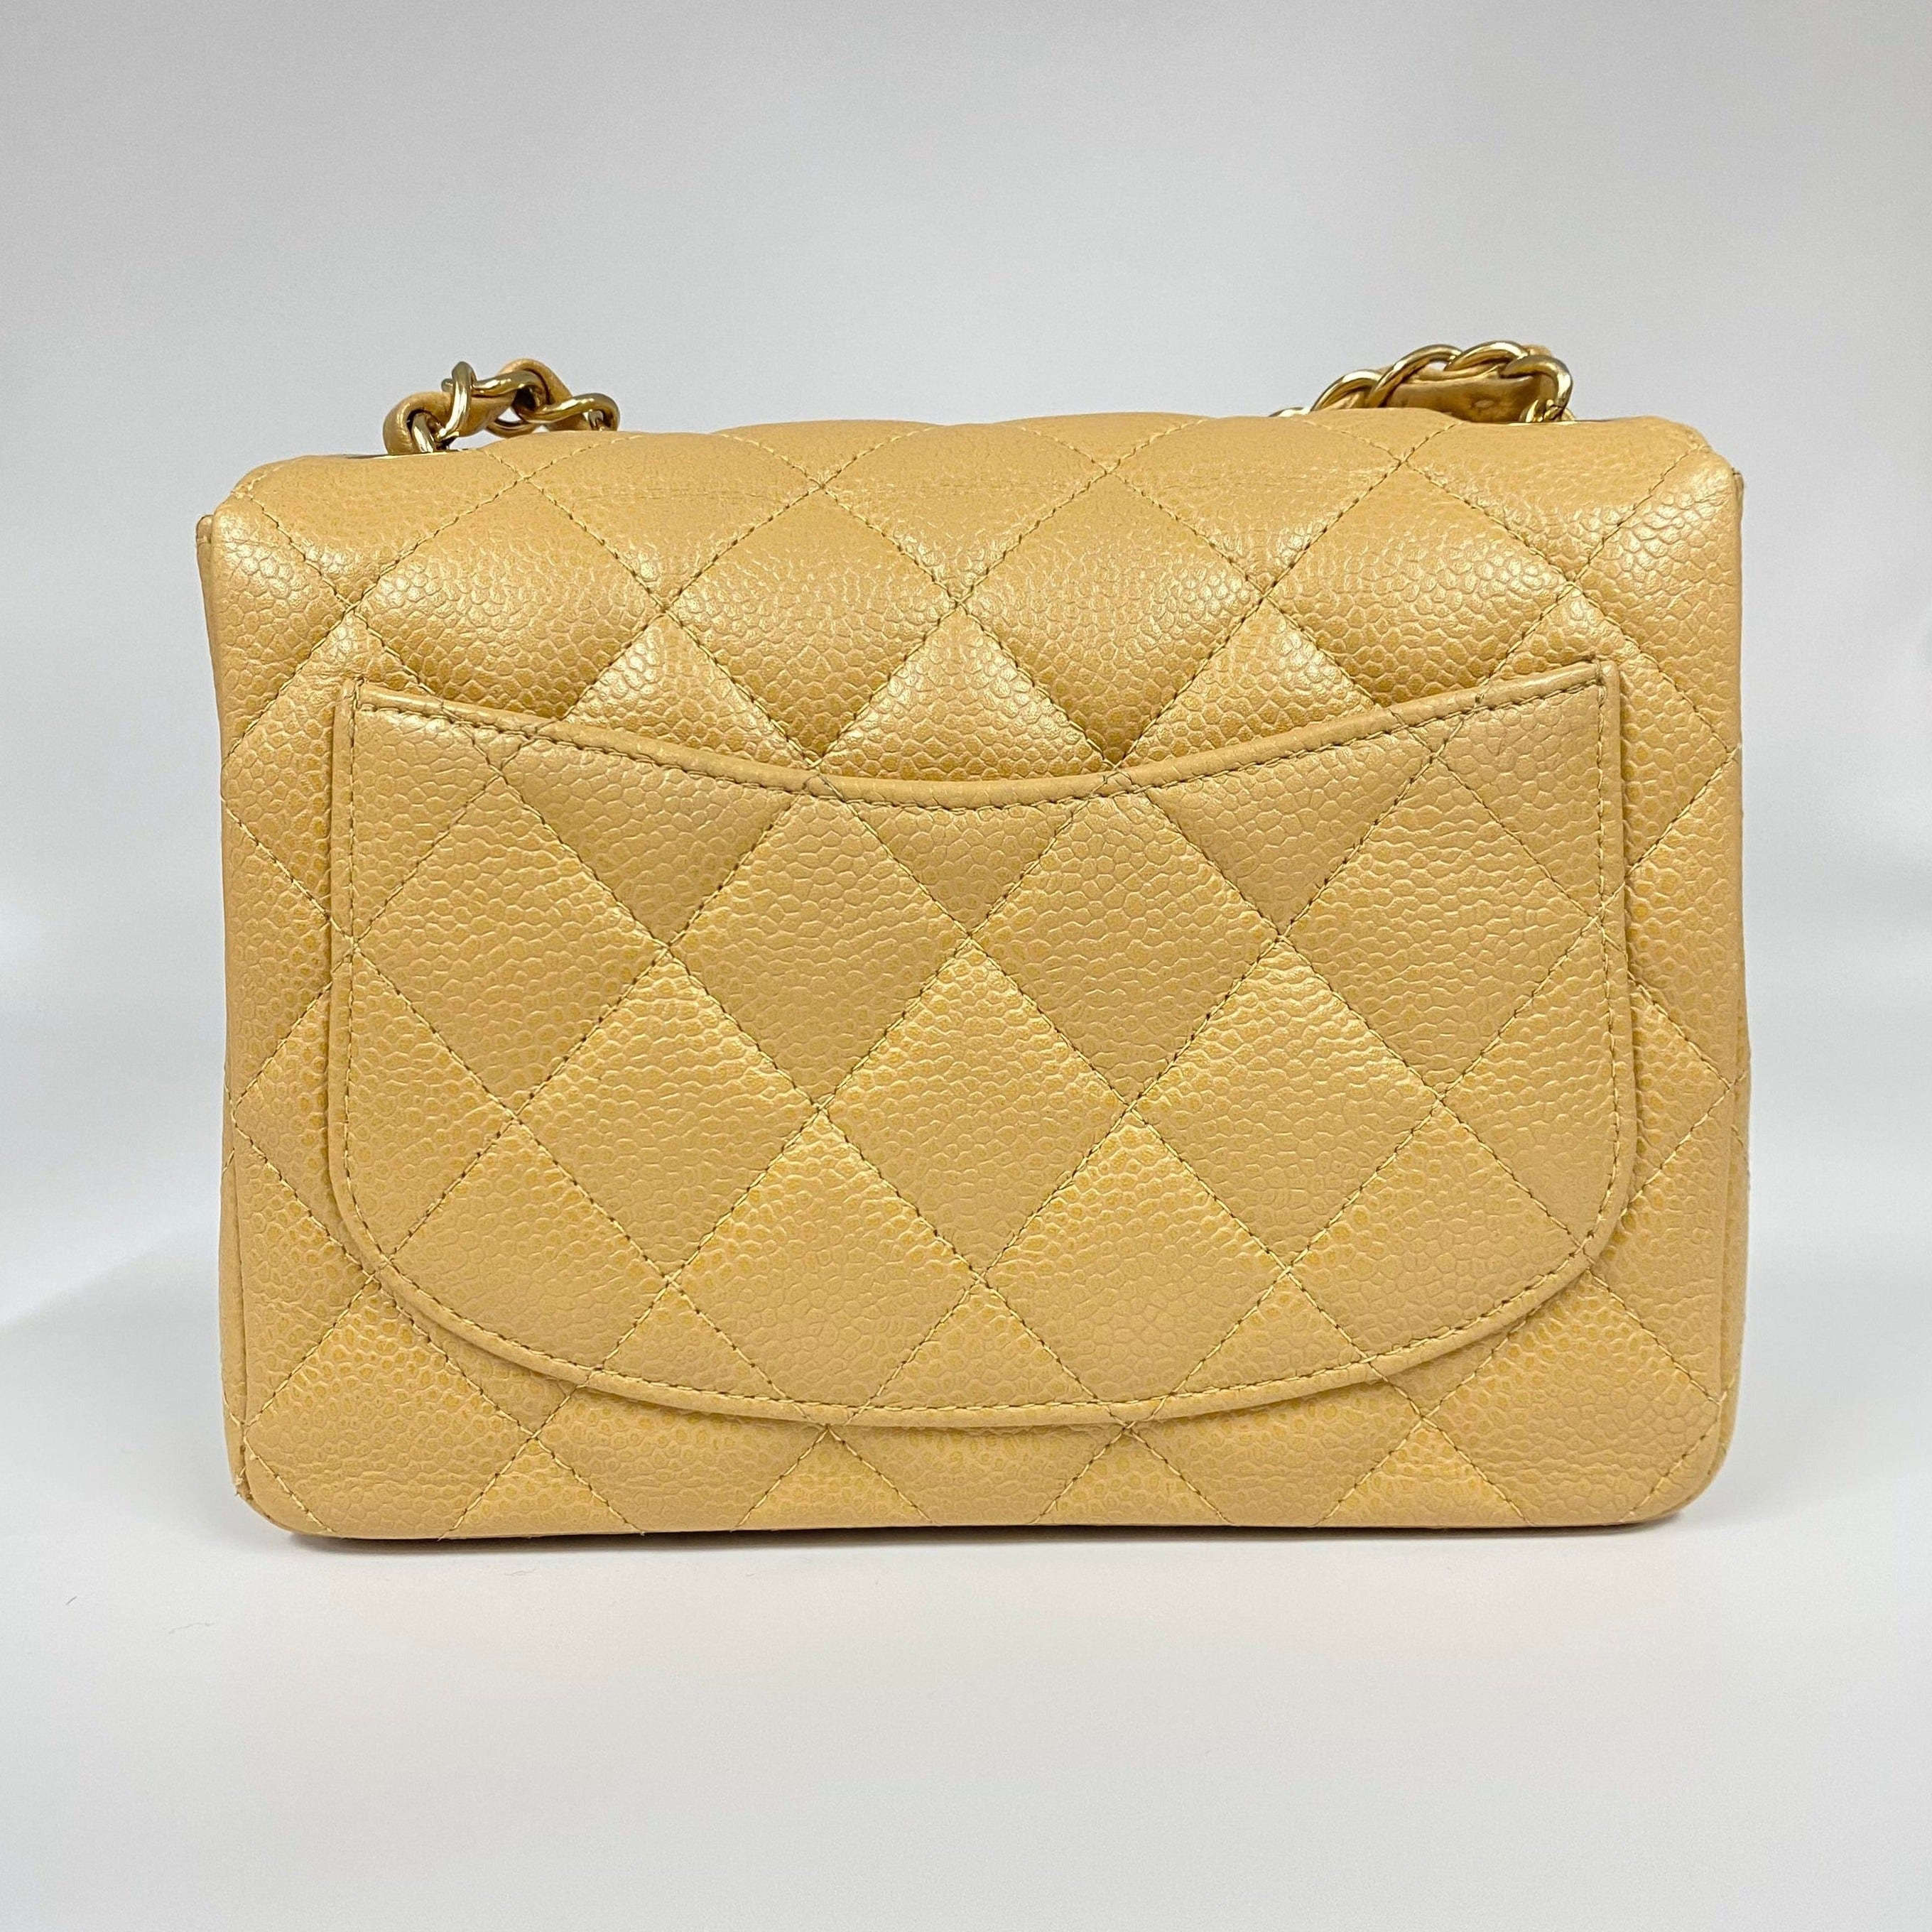 Chanel CHANEL VINTAGE MINI SQUARE 17 CHAIN SHOULDER BAG BEIGE CAVIAR SKIN 90215426